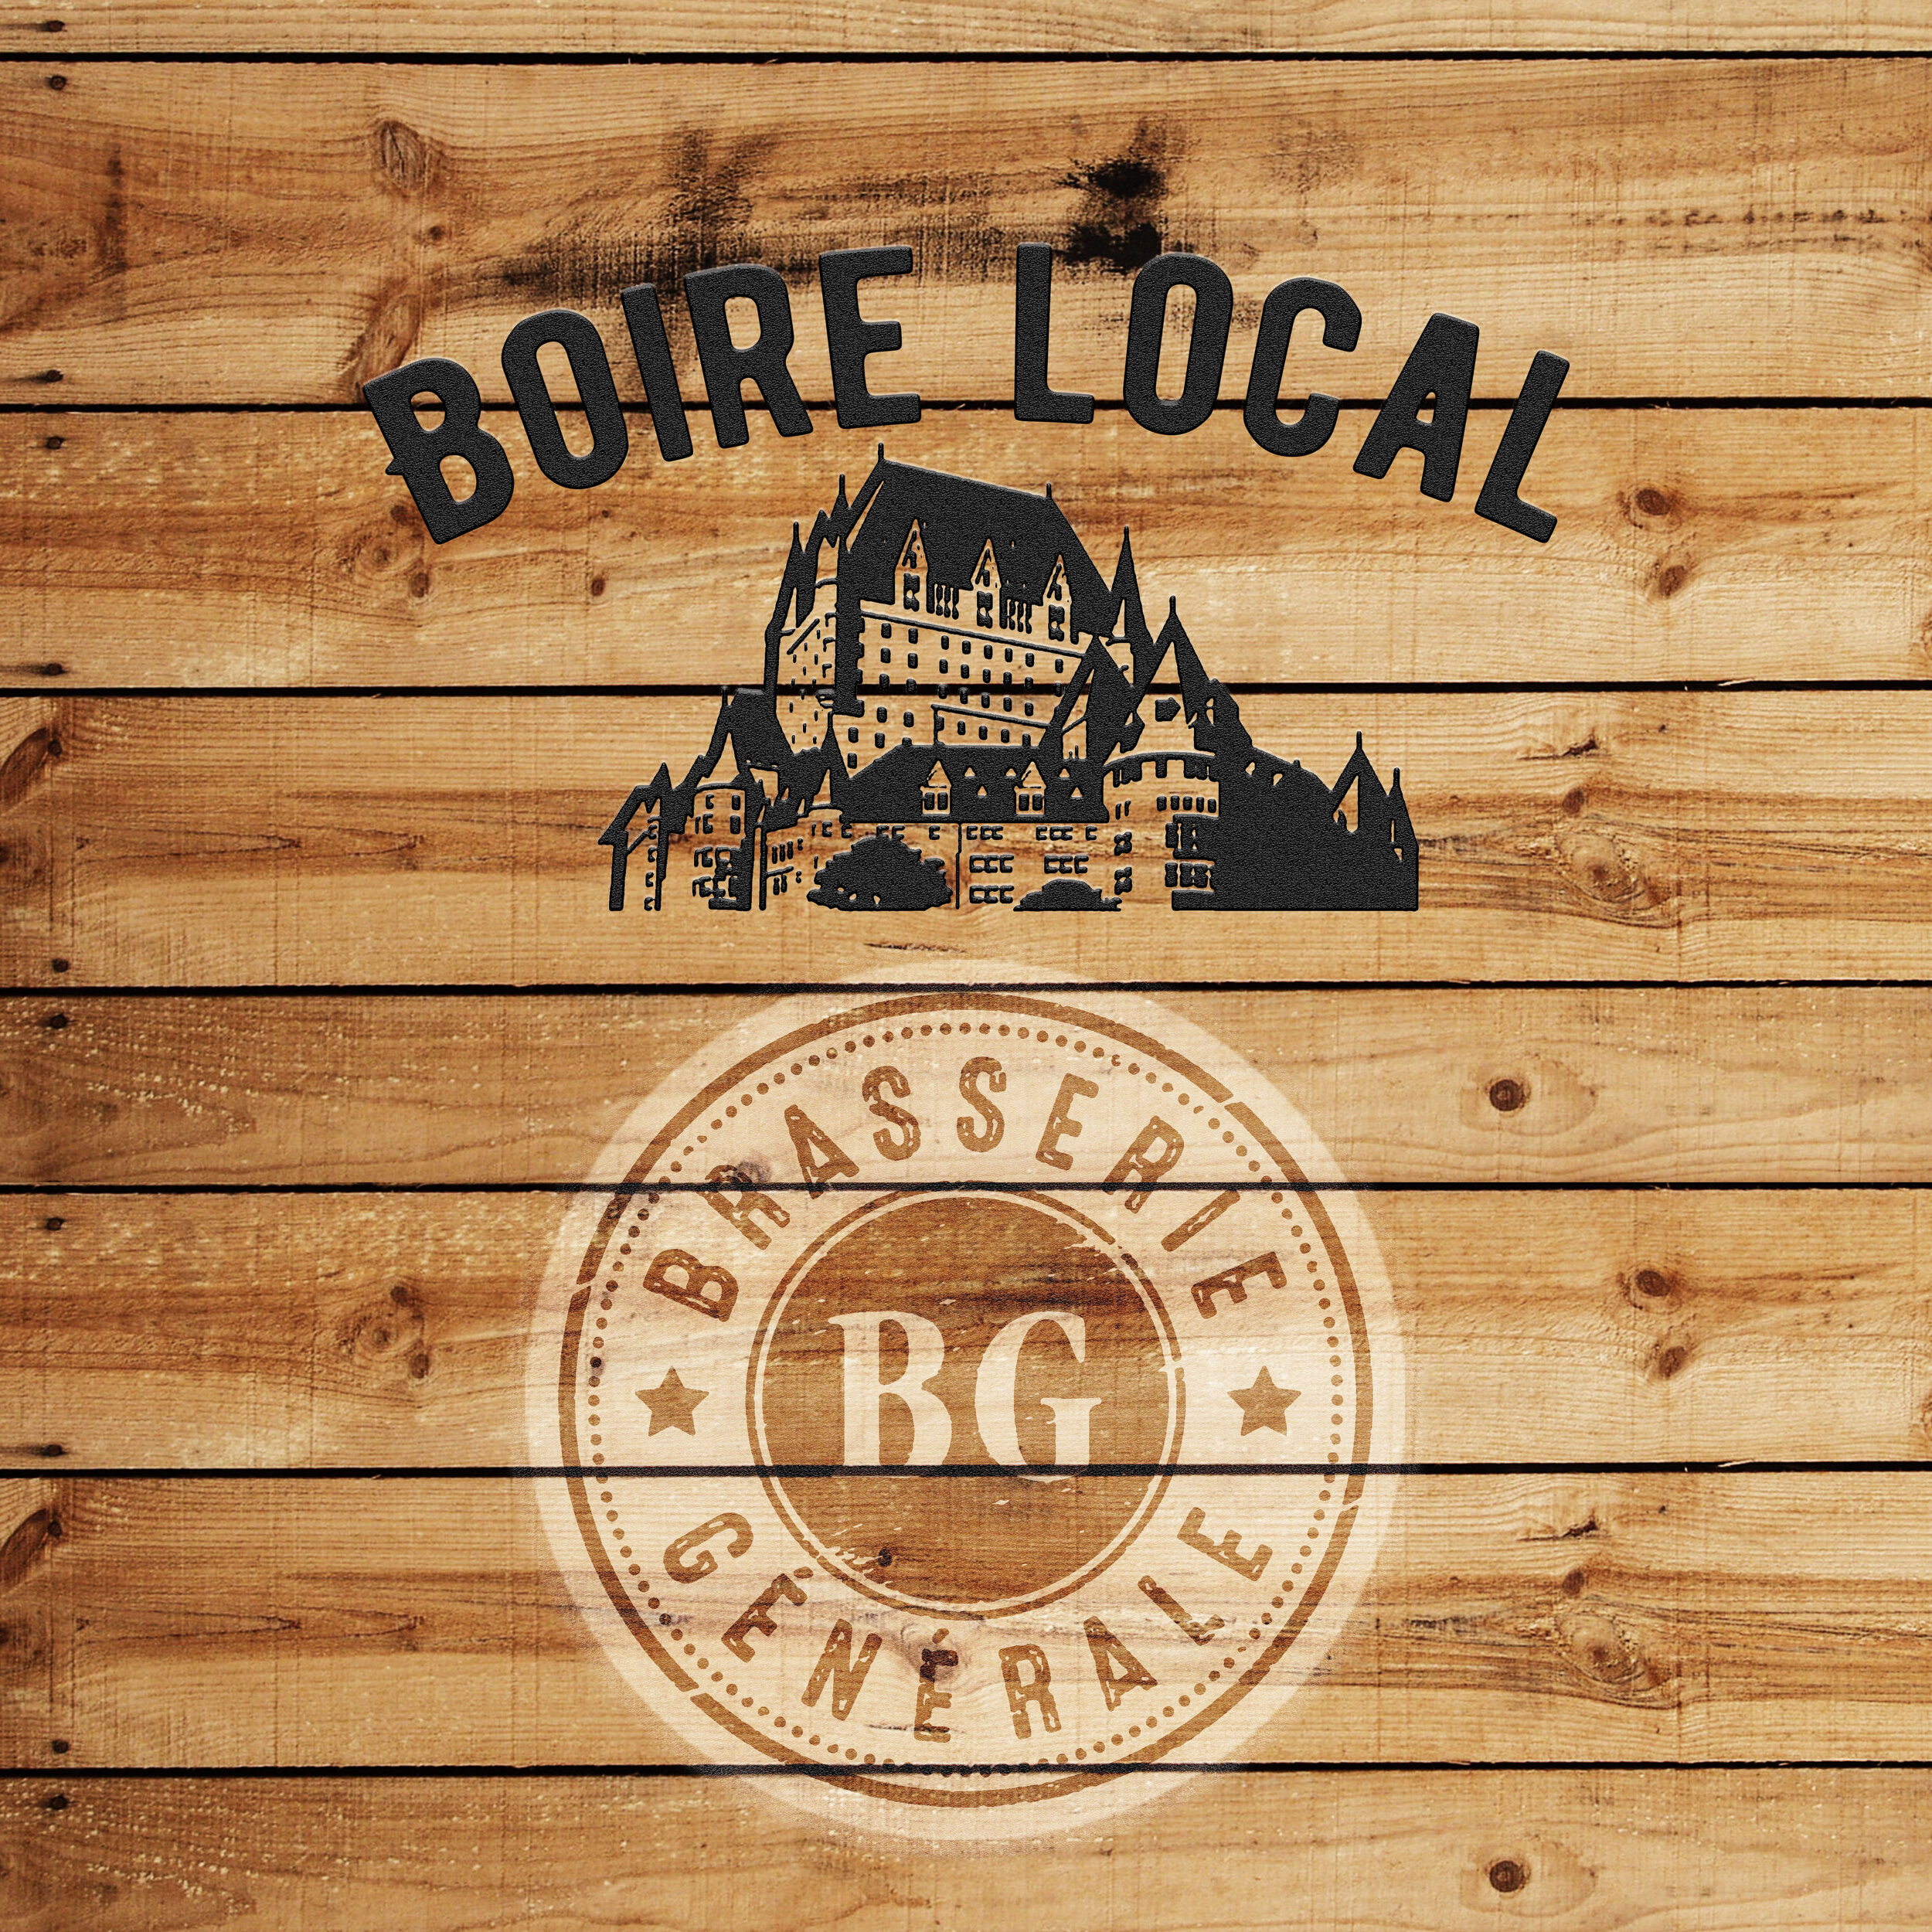 Boire-local-brasserie-générale.jpg